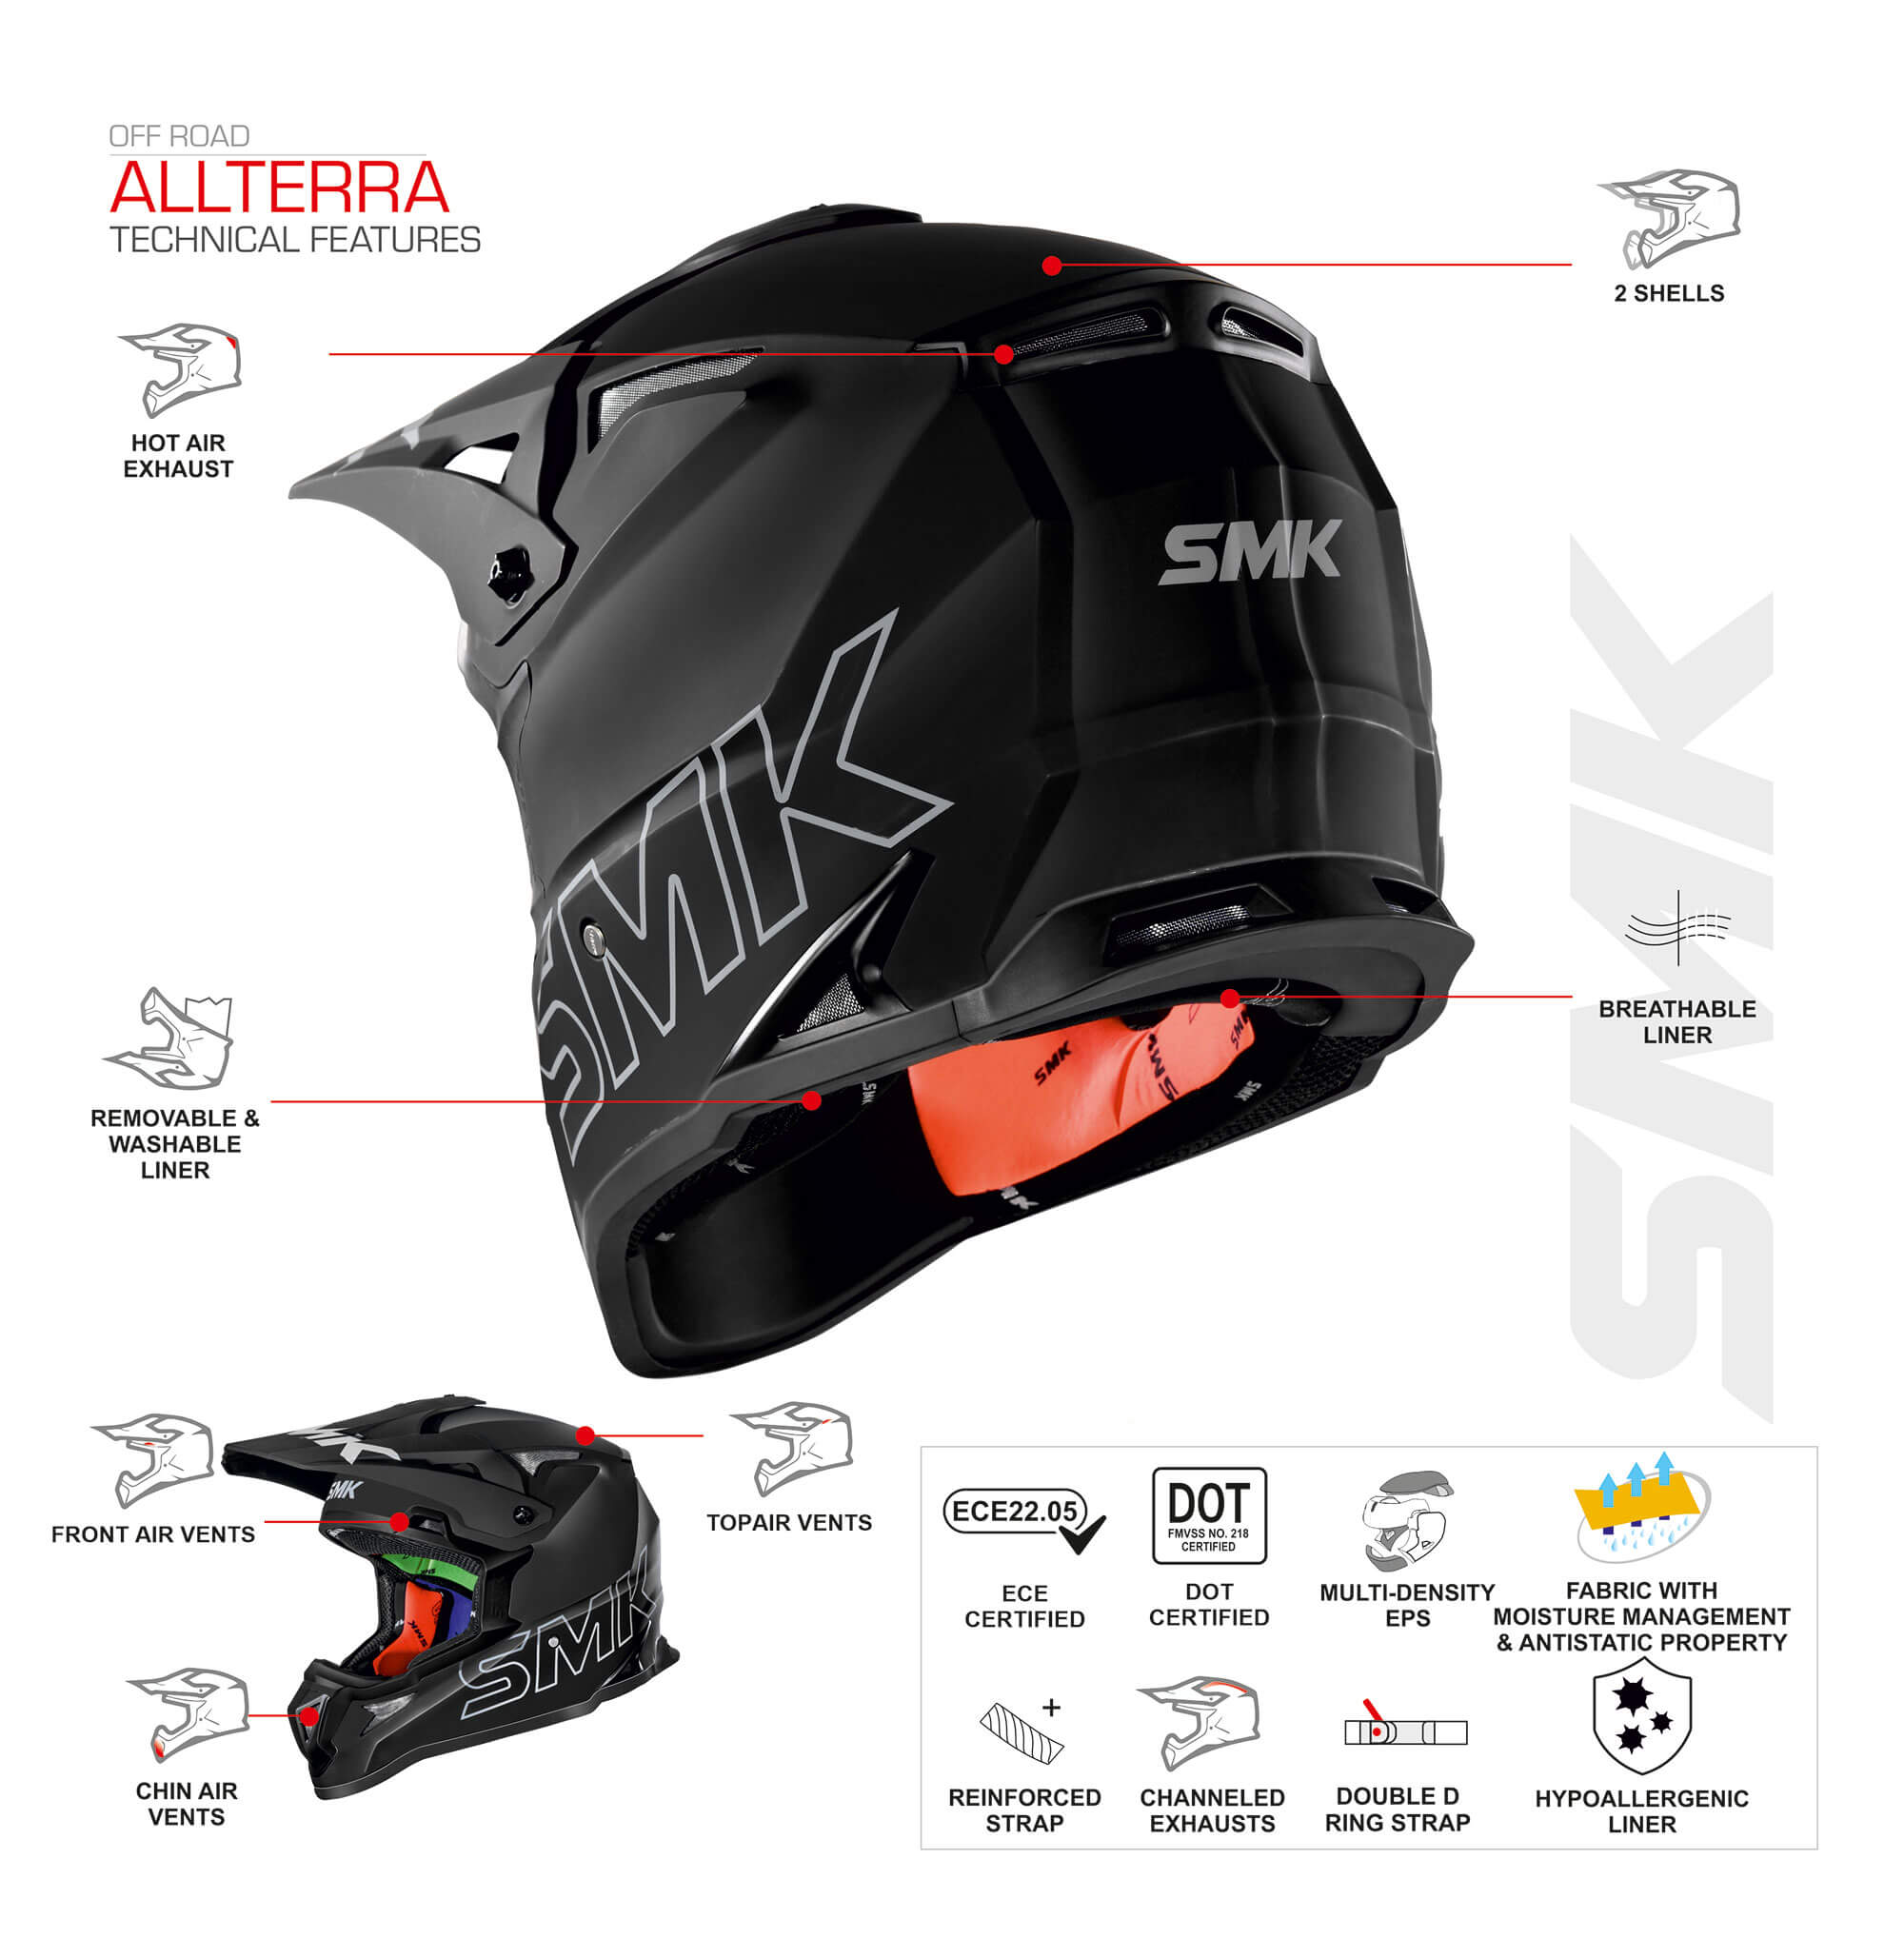 Allterra Helmet Features